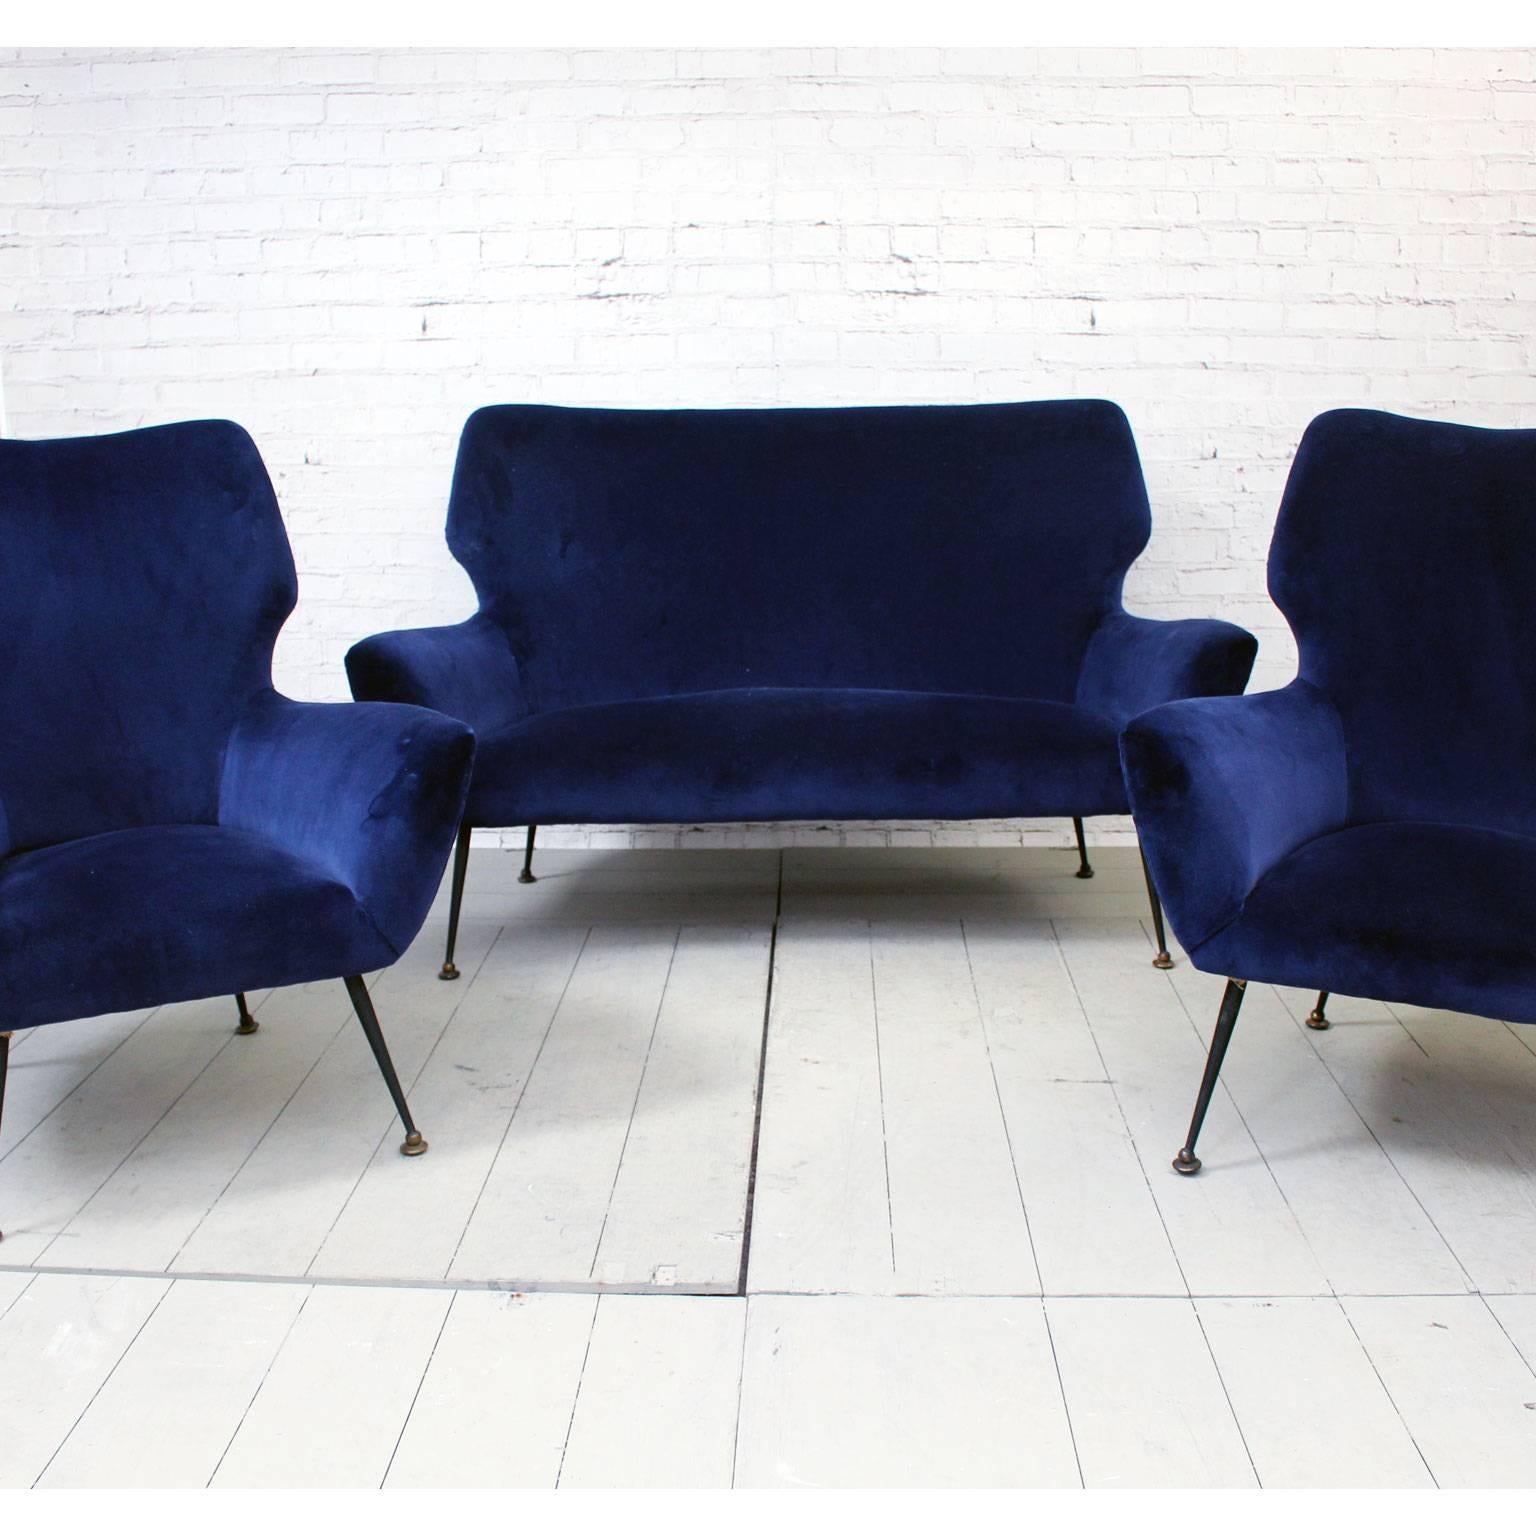 Mid-20th Century 1950s Midcentury Italian Two-Seat Sofa in Blue Velvet